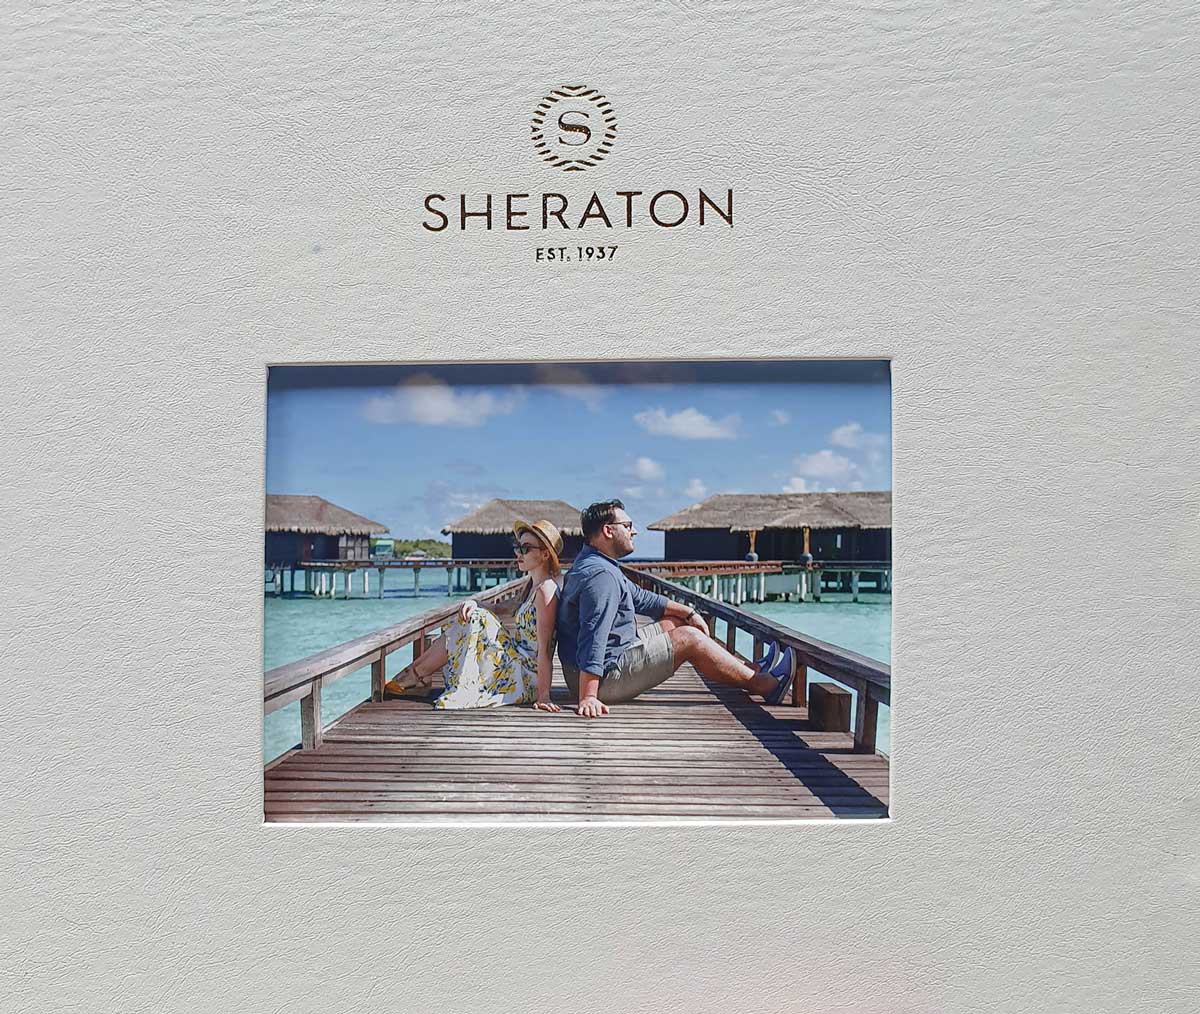 sheraton maldives full moon resort & spa review: photo album